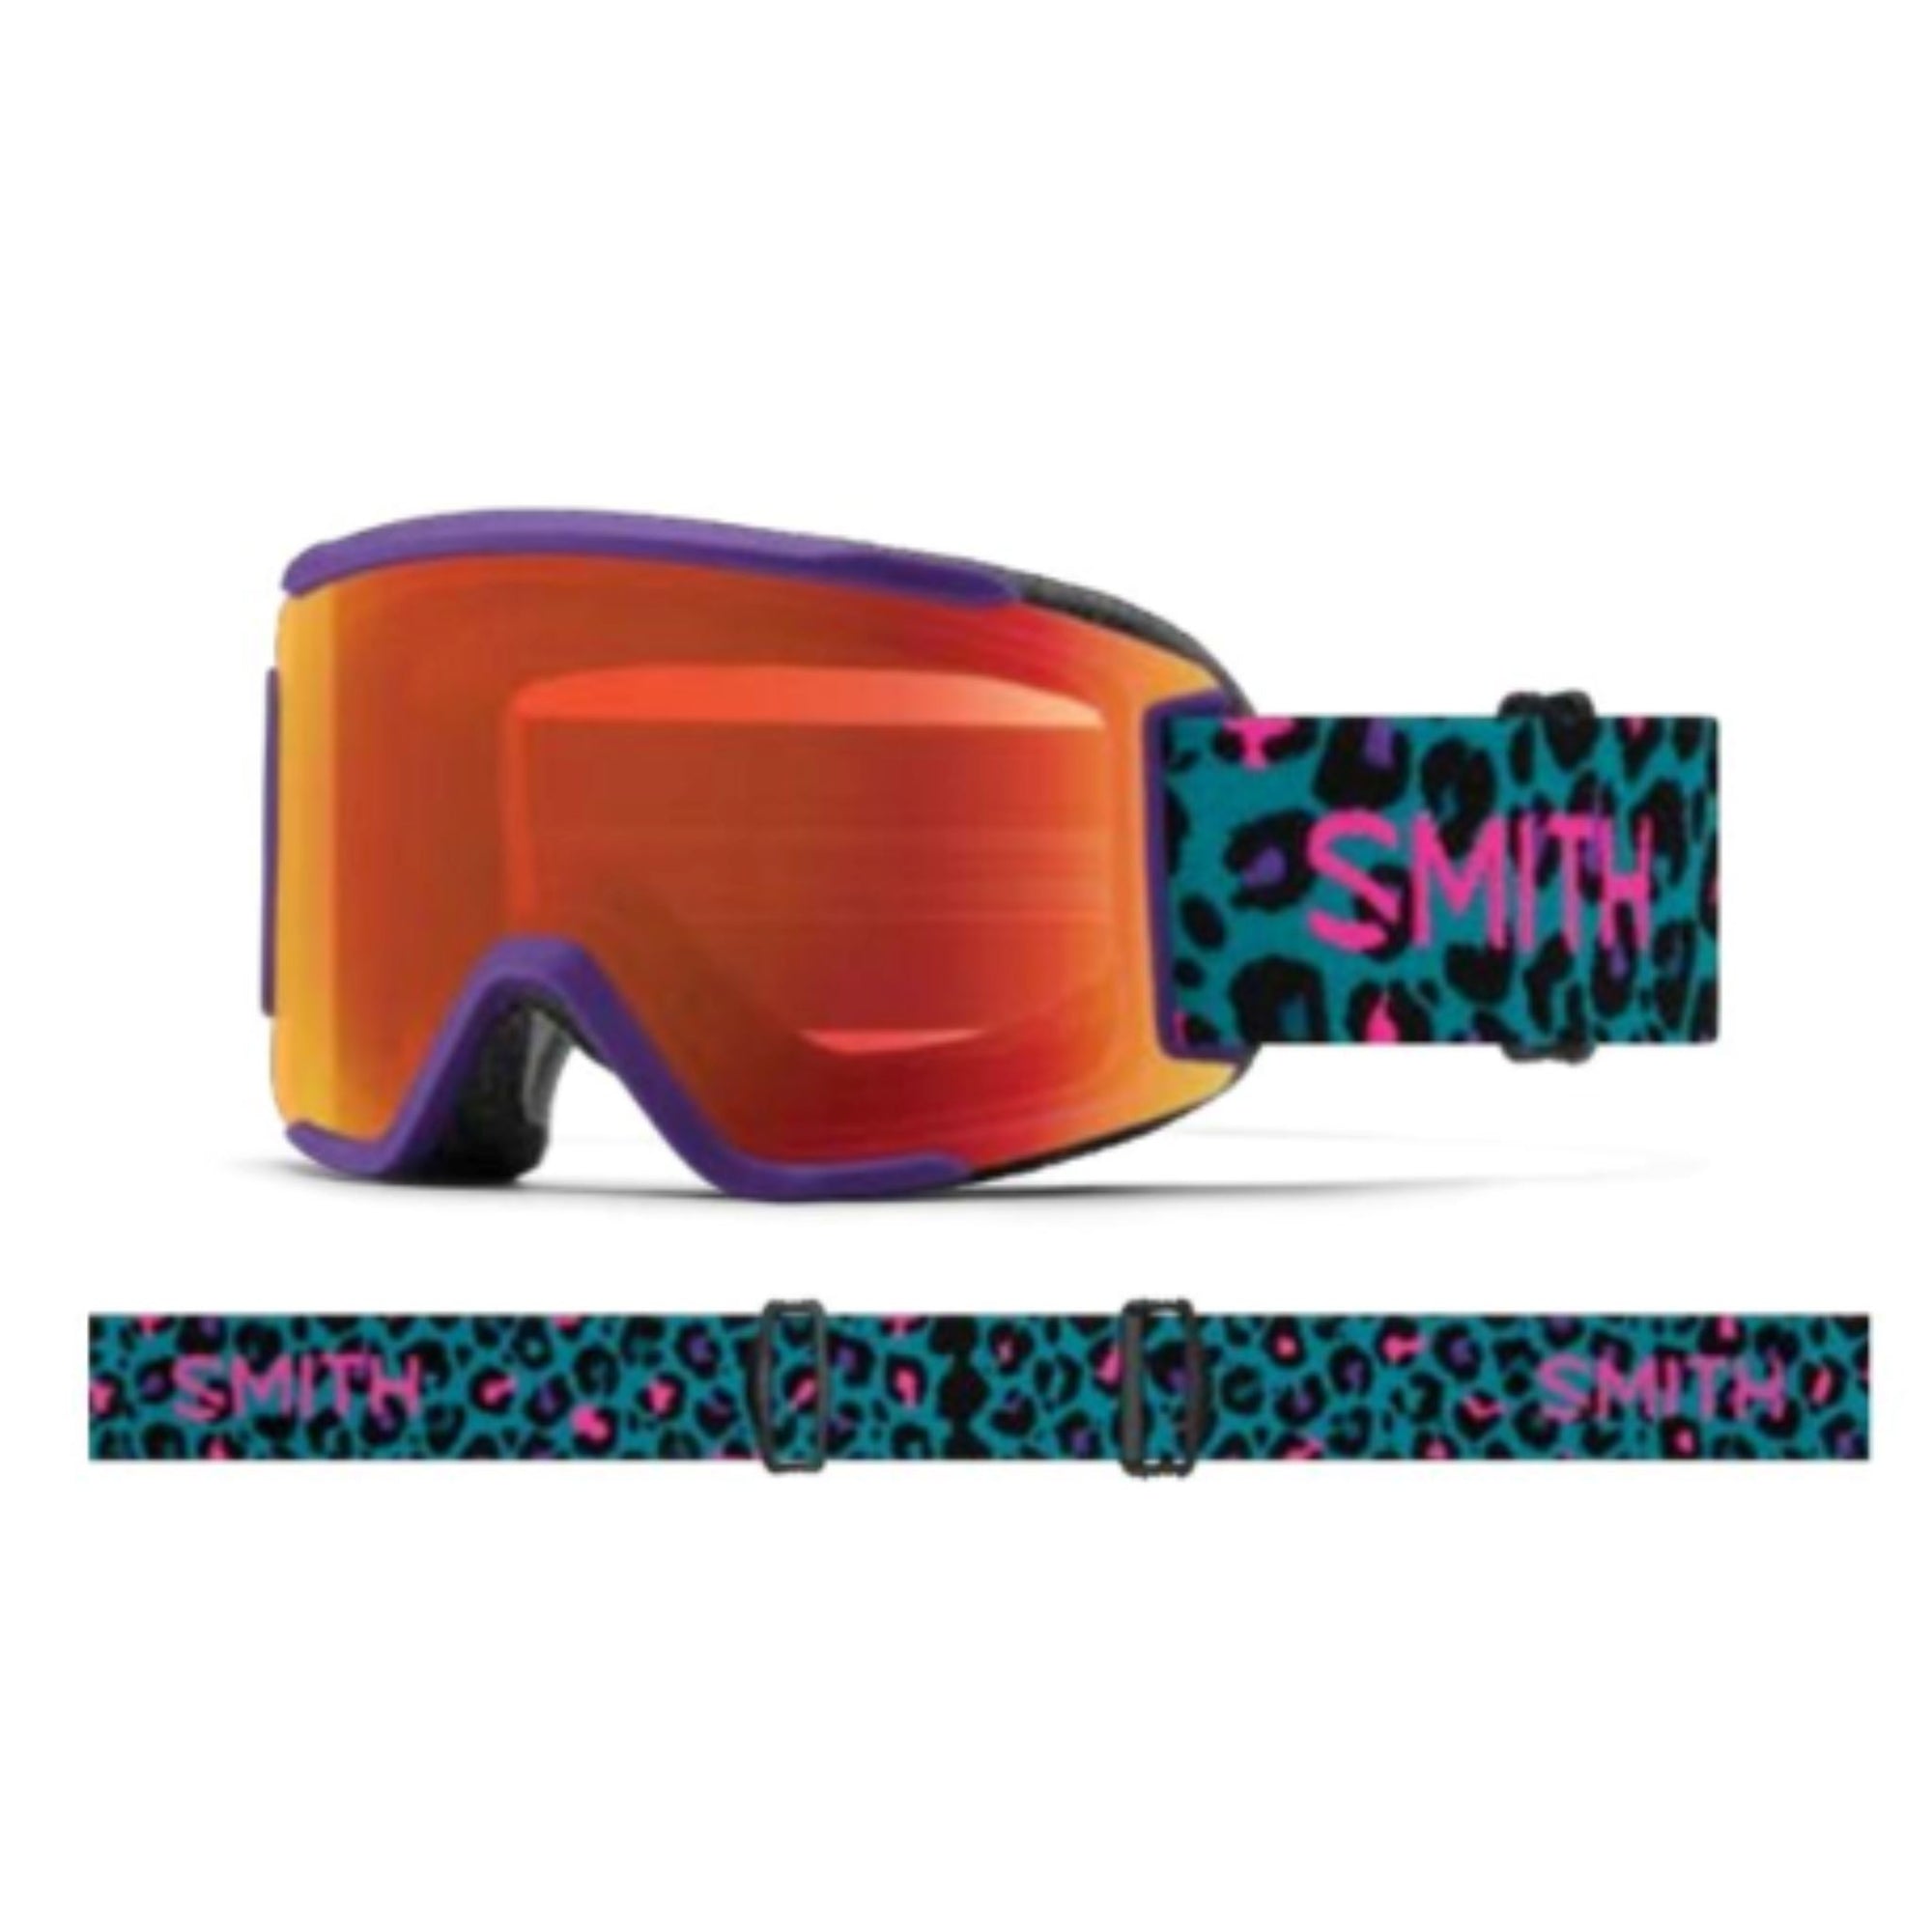 Smith Squad S Goggles (Small Fit) - Purple Haze Neon Cheetah ChromaPop Everyday Red Mirror Goggles Smith 